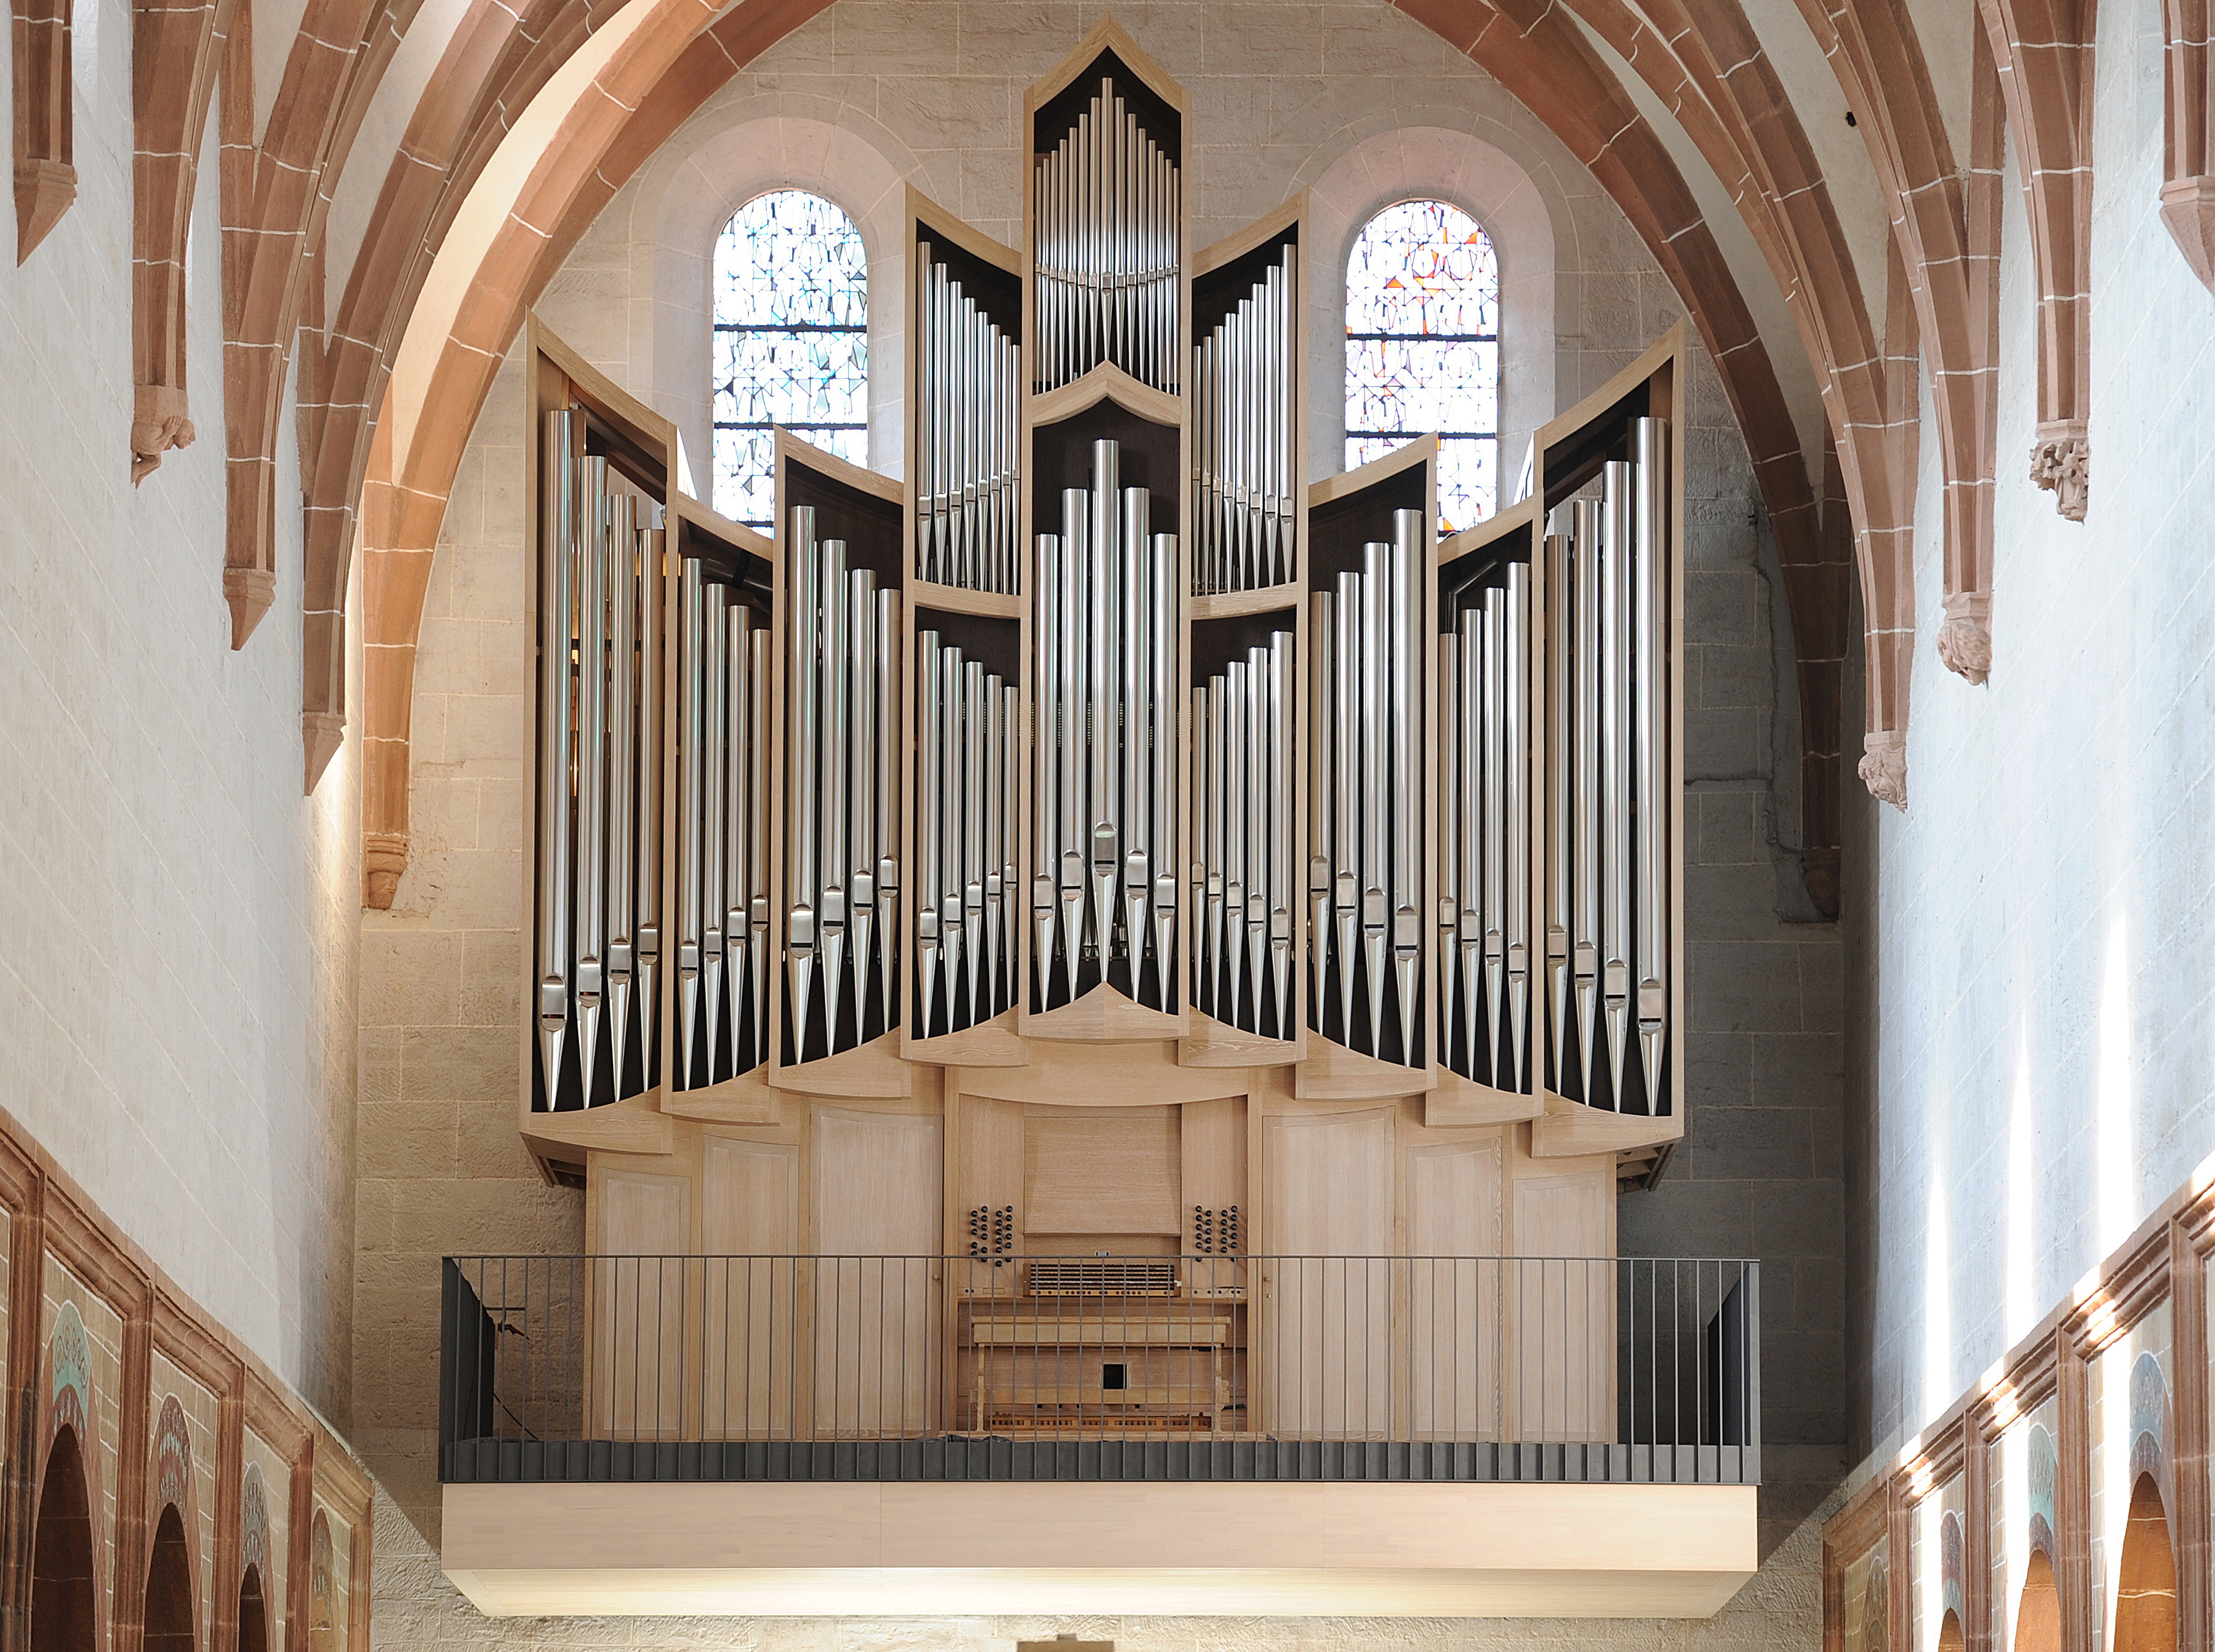 10 years Grenzing organ in the monastery church of Maulbronn